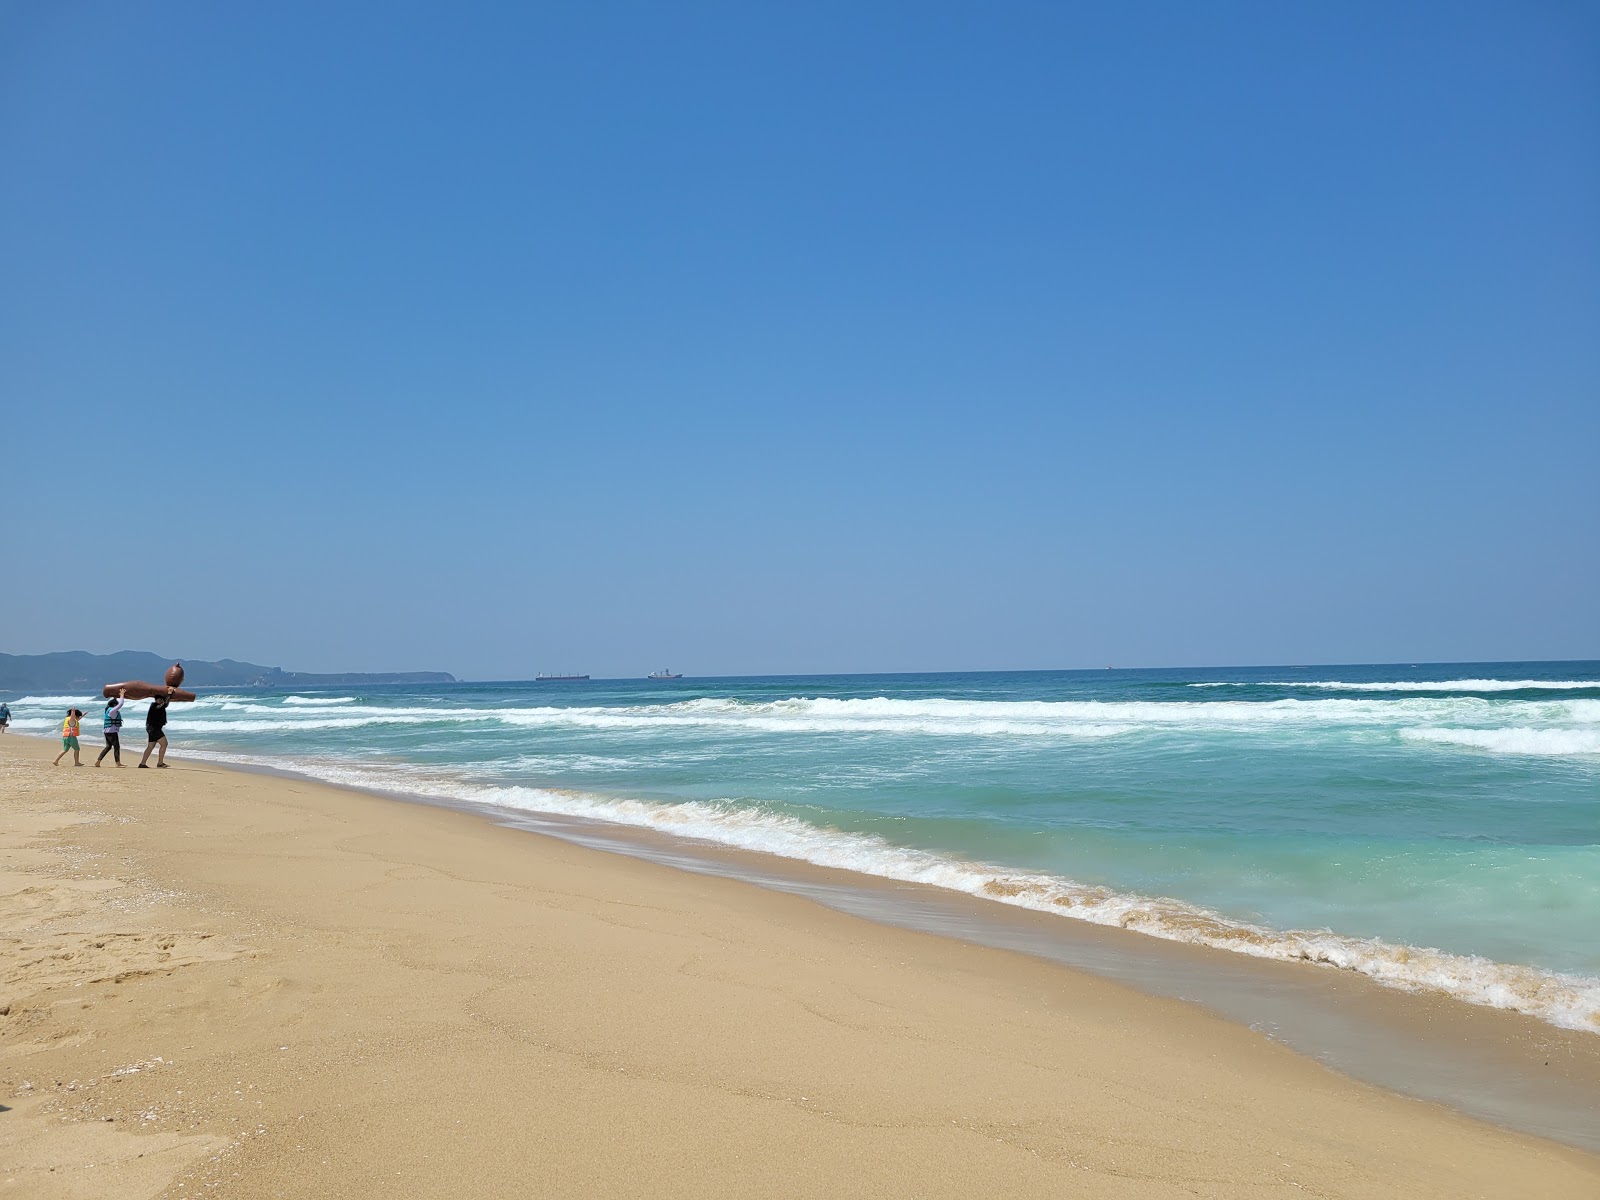 Foto de Mangsang Beach - lugar popular entre os apreciadores de relaxamento